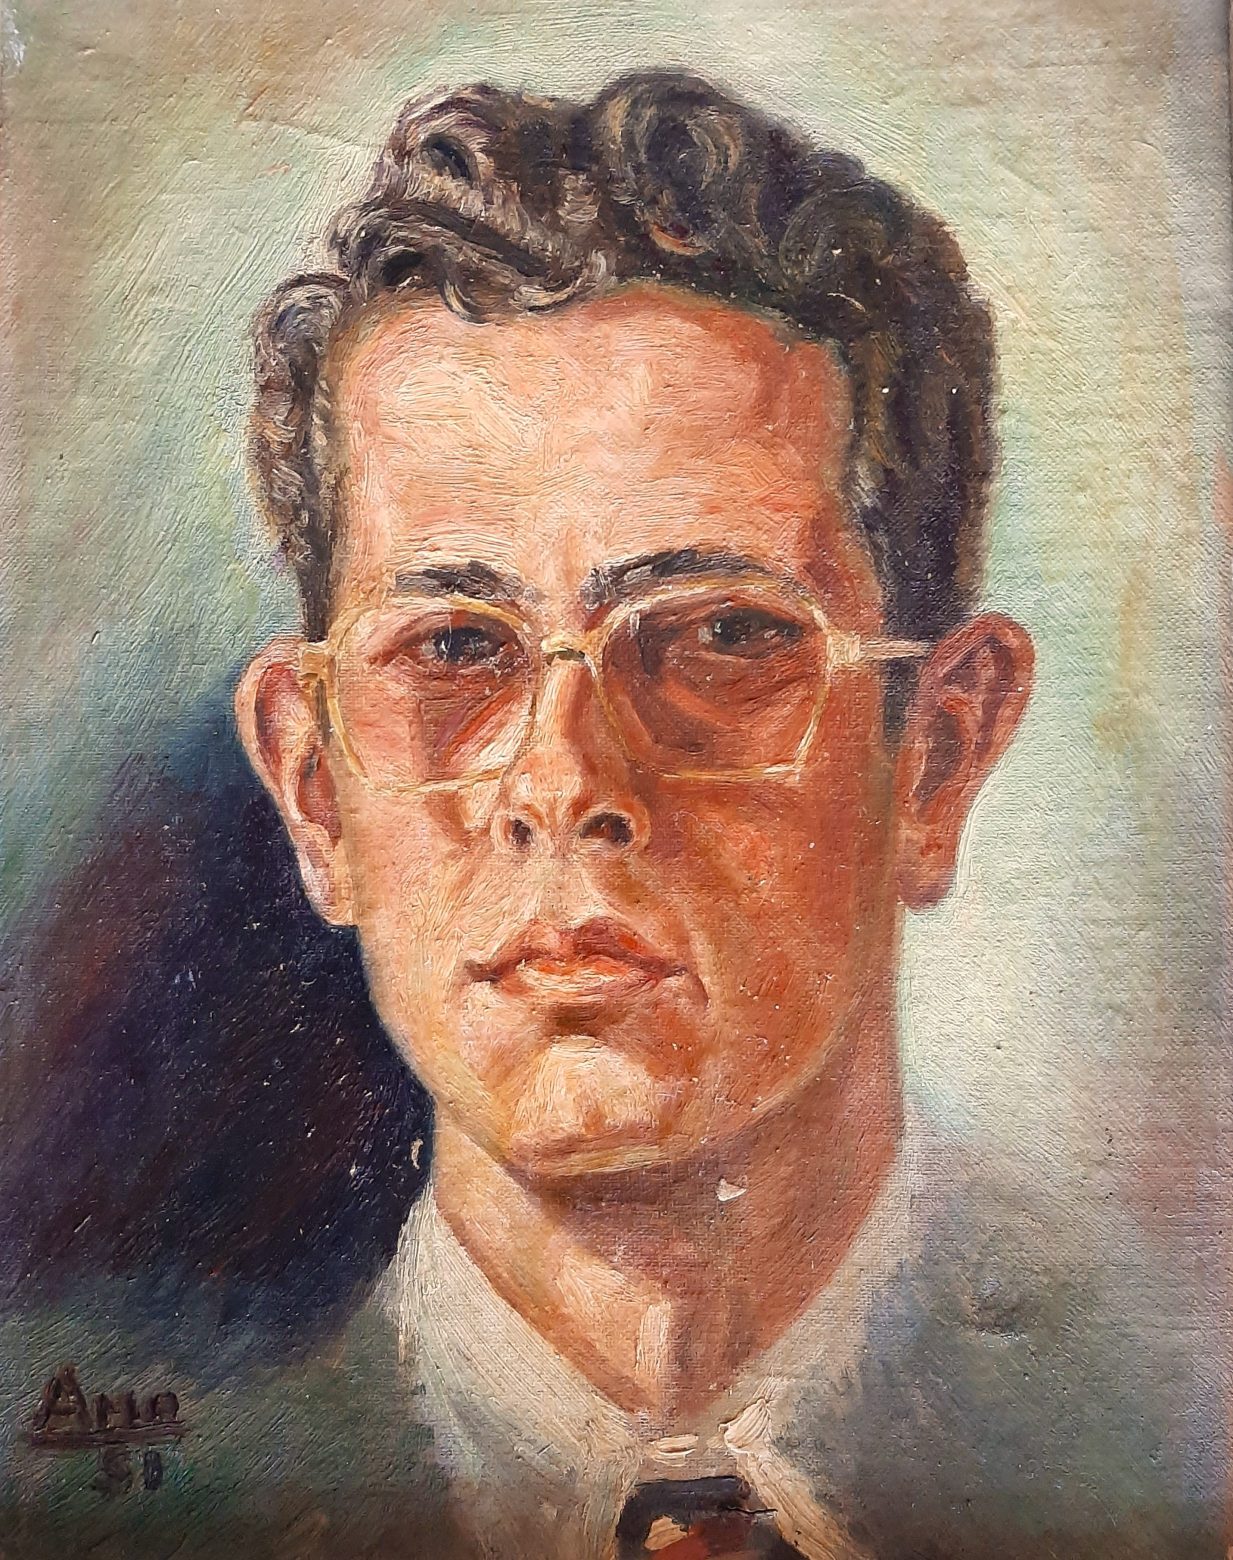 Juan Amo. (1951). Autorretrato. Óleo - Lienzo. 40 x 30.